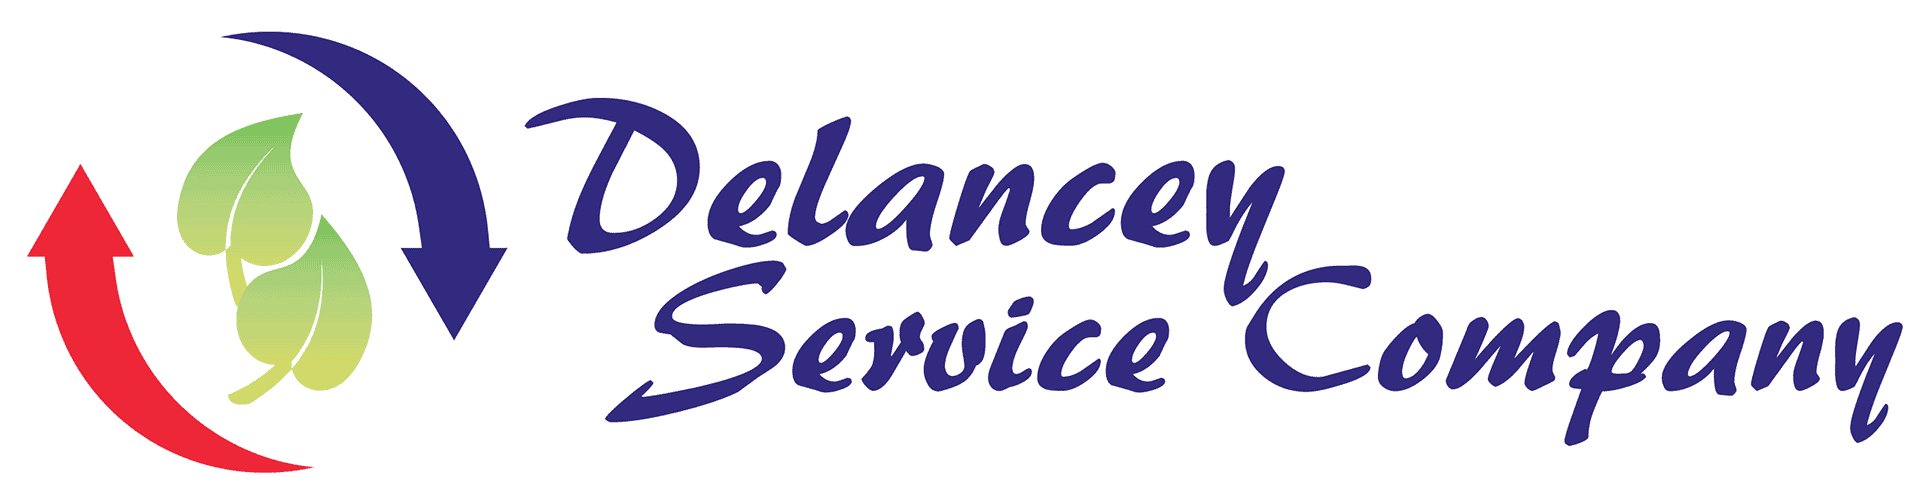 Delancey Service Company